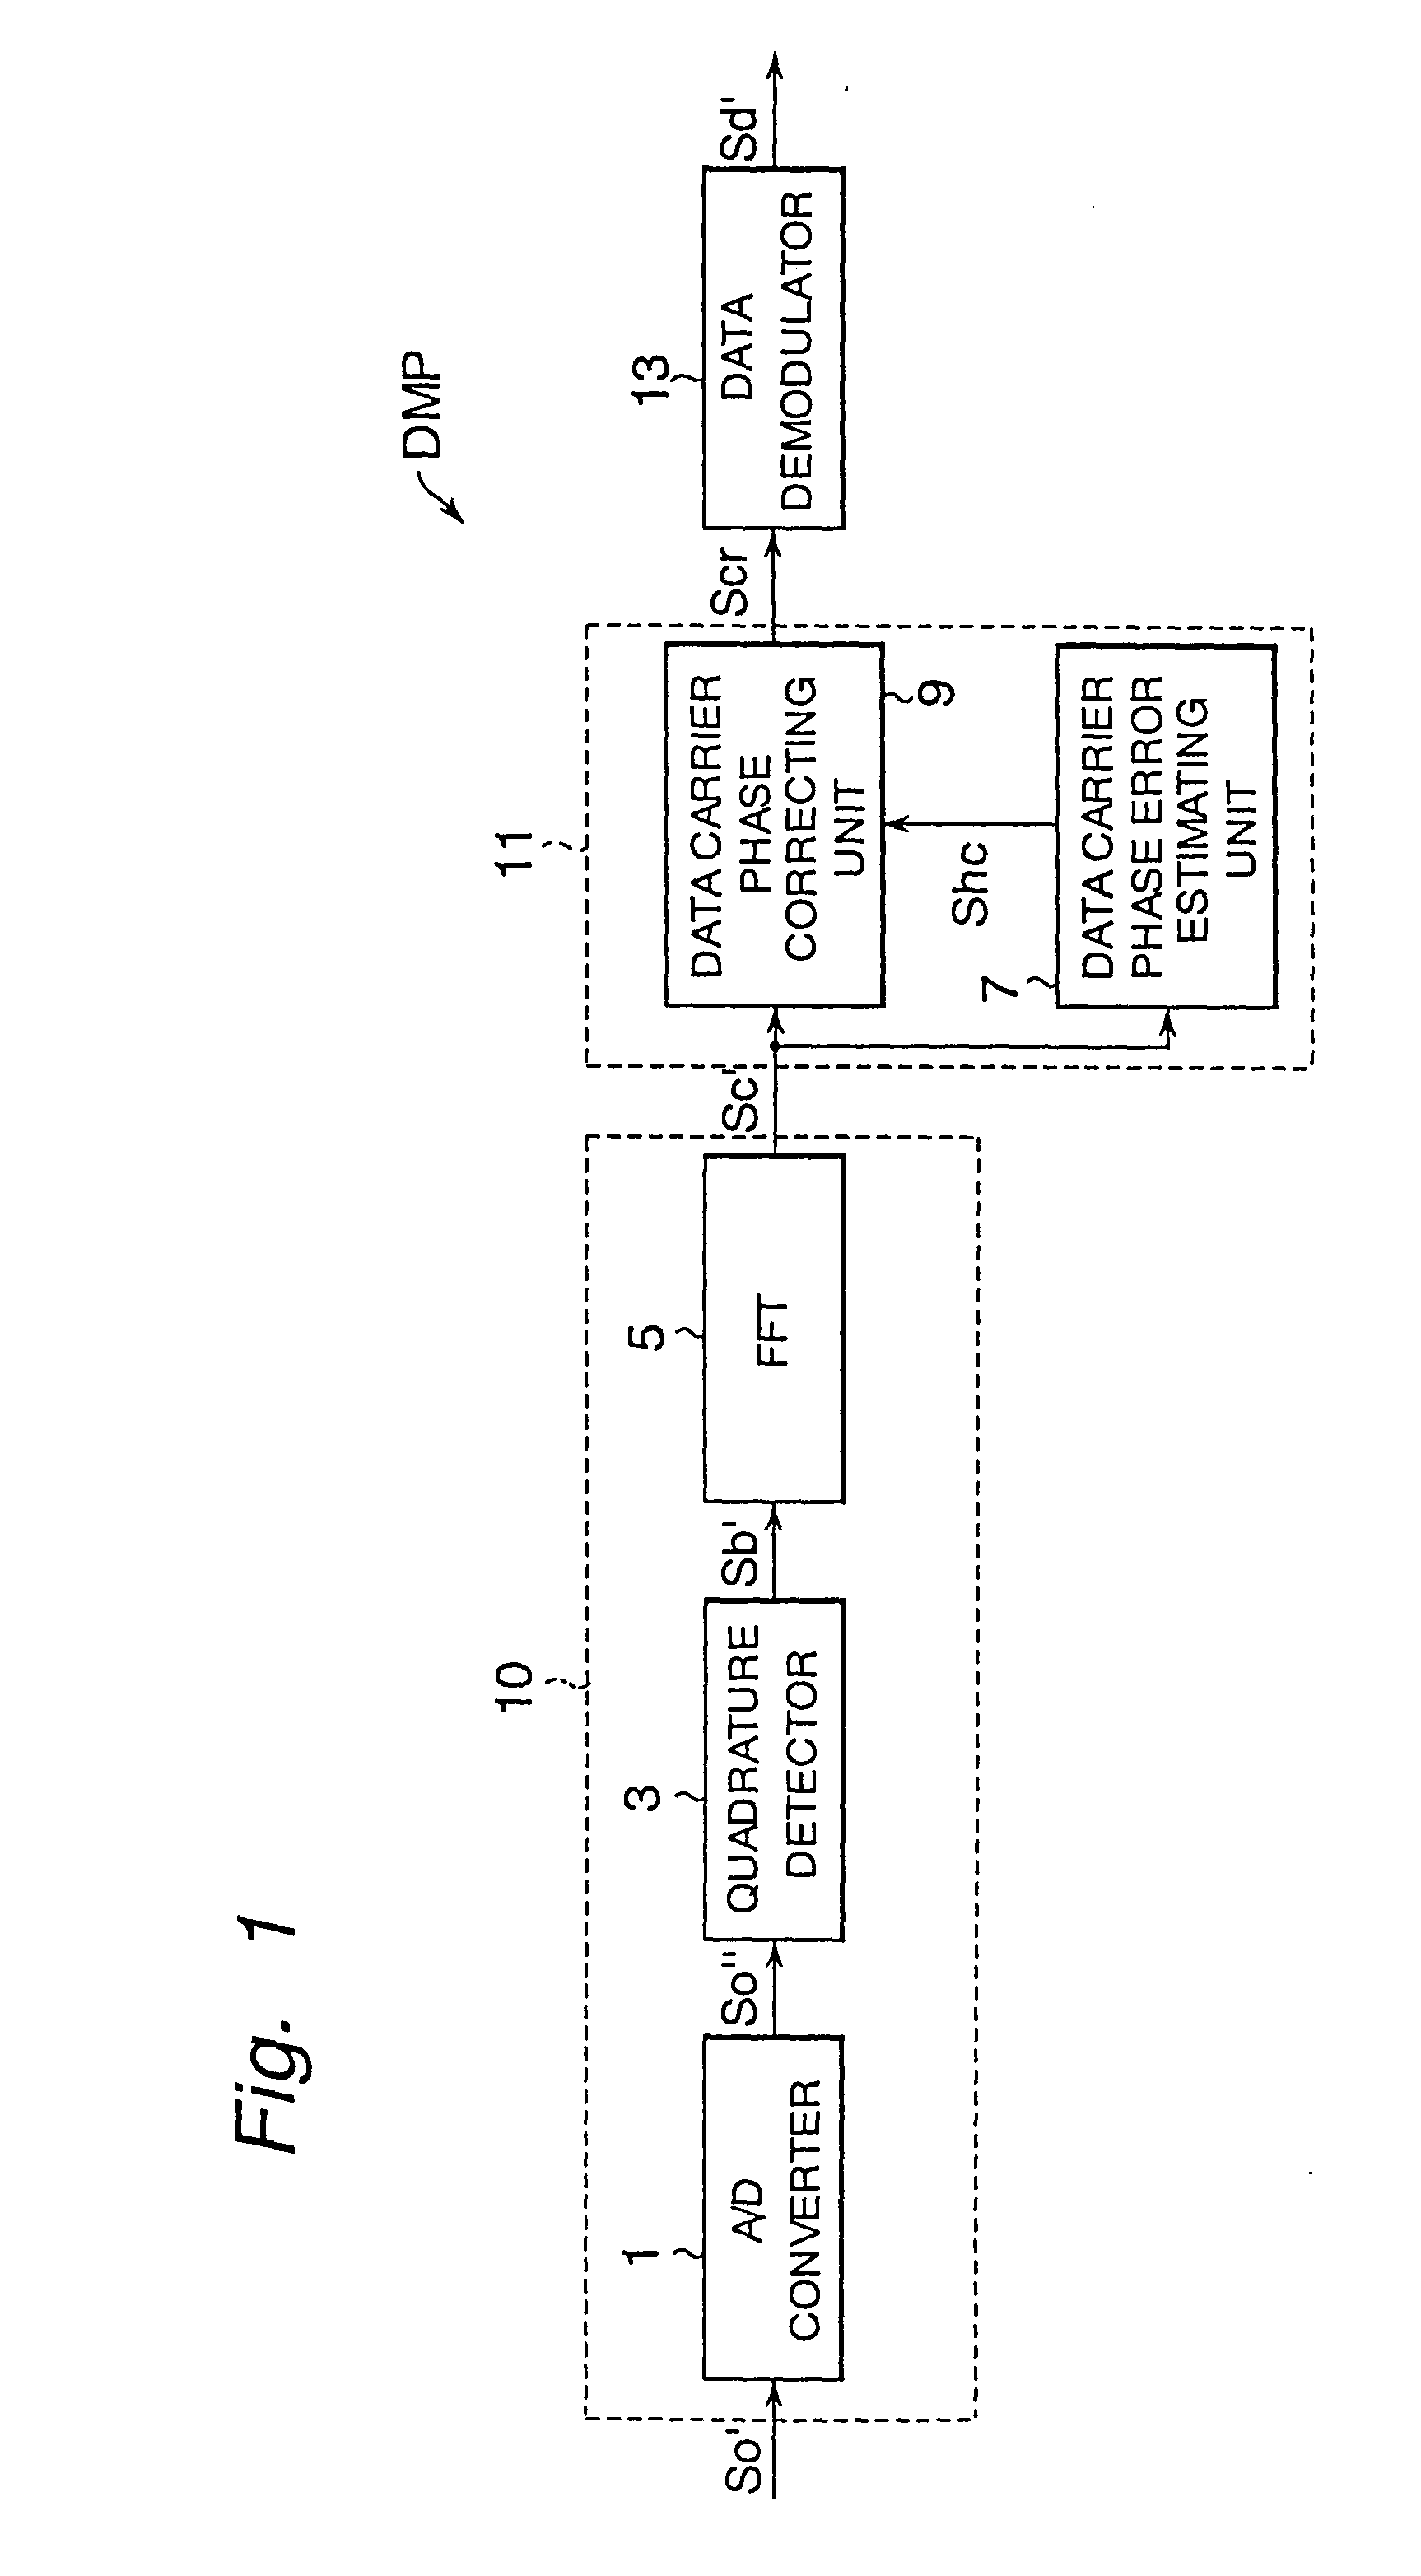 Modulator, demodulator, and transmission system for use in OFDM transmission